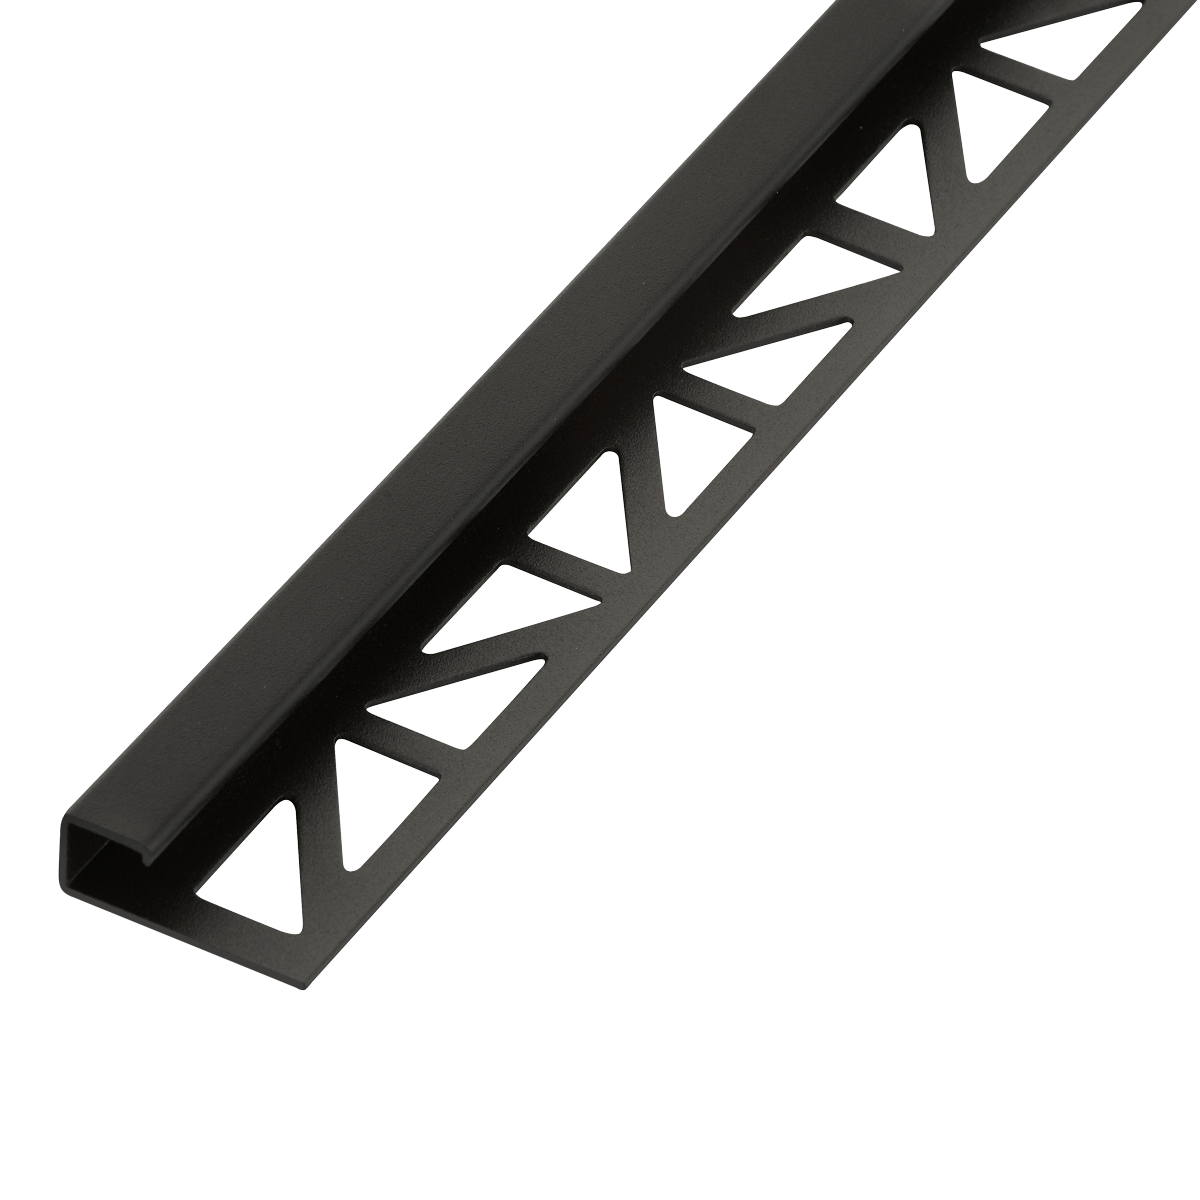 Blanke Fliesenschiene CUBELINE quadratische Form Aluminium eloxiert schwarz matt 12,5 mm hoch 2,5 lang